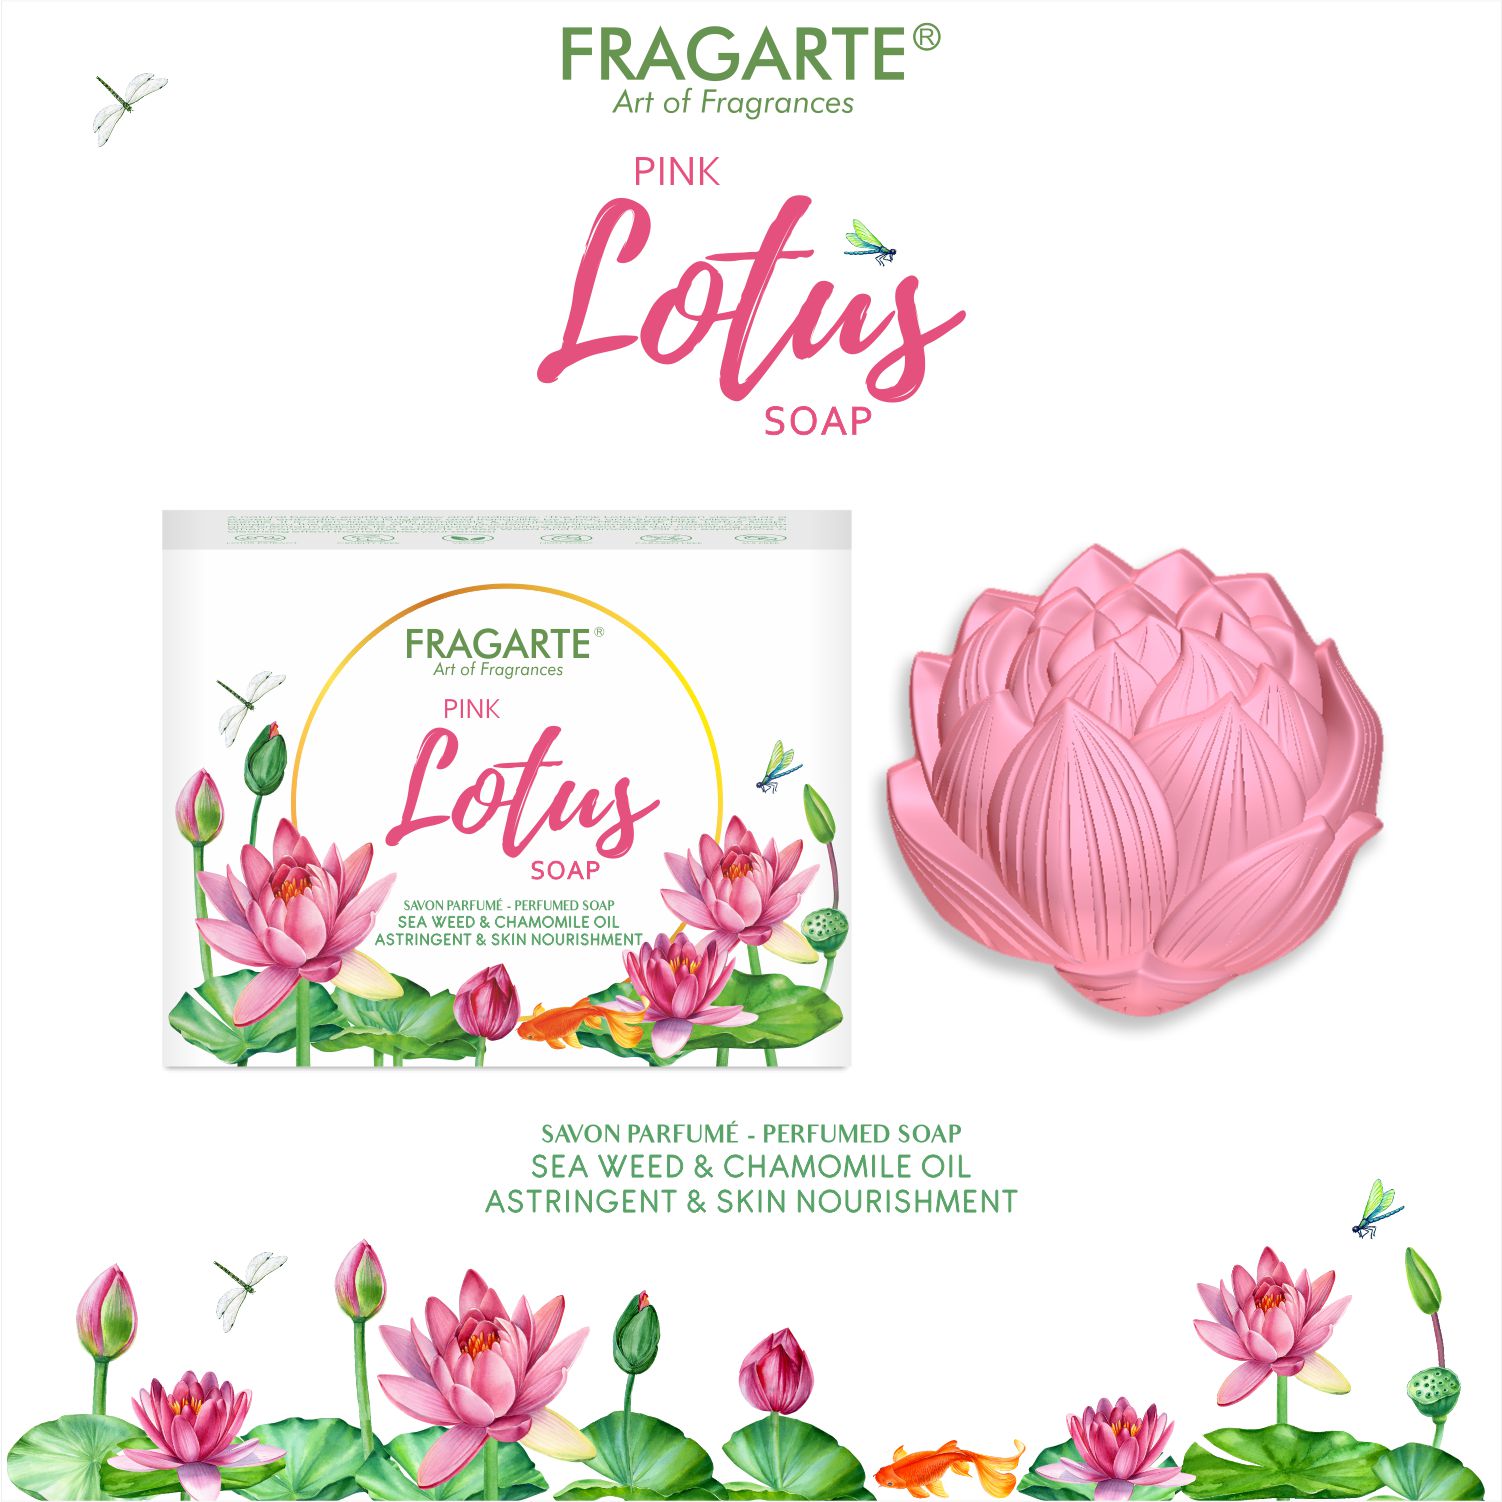 Fragarte Pink Lotus Soap